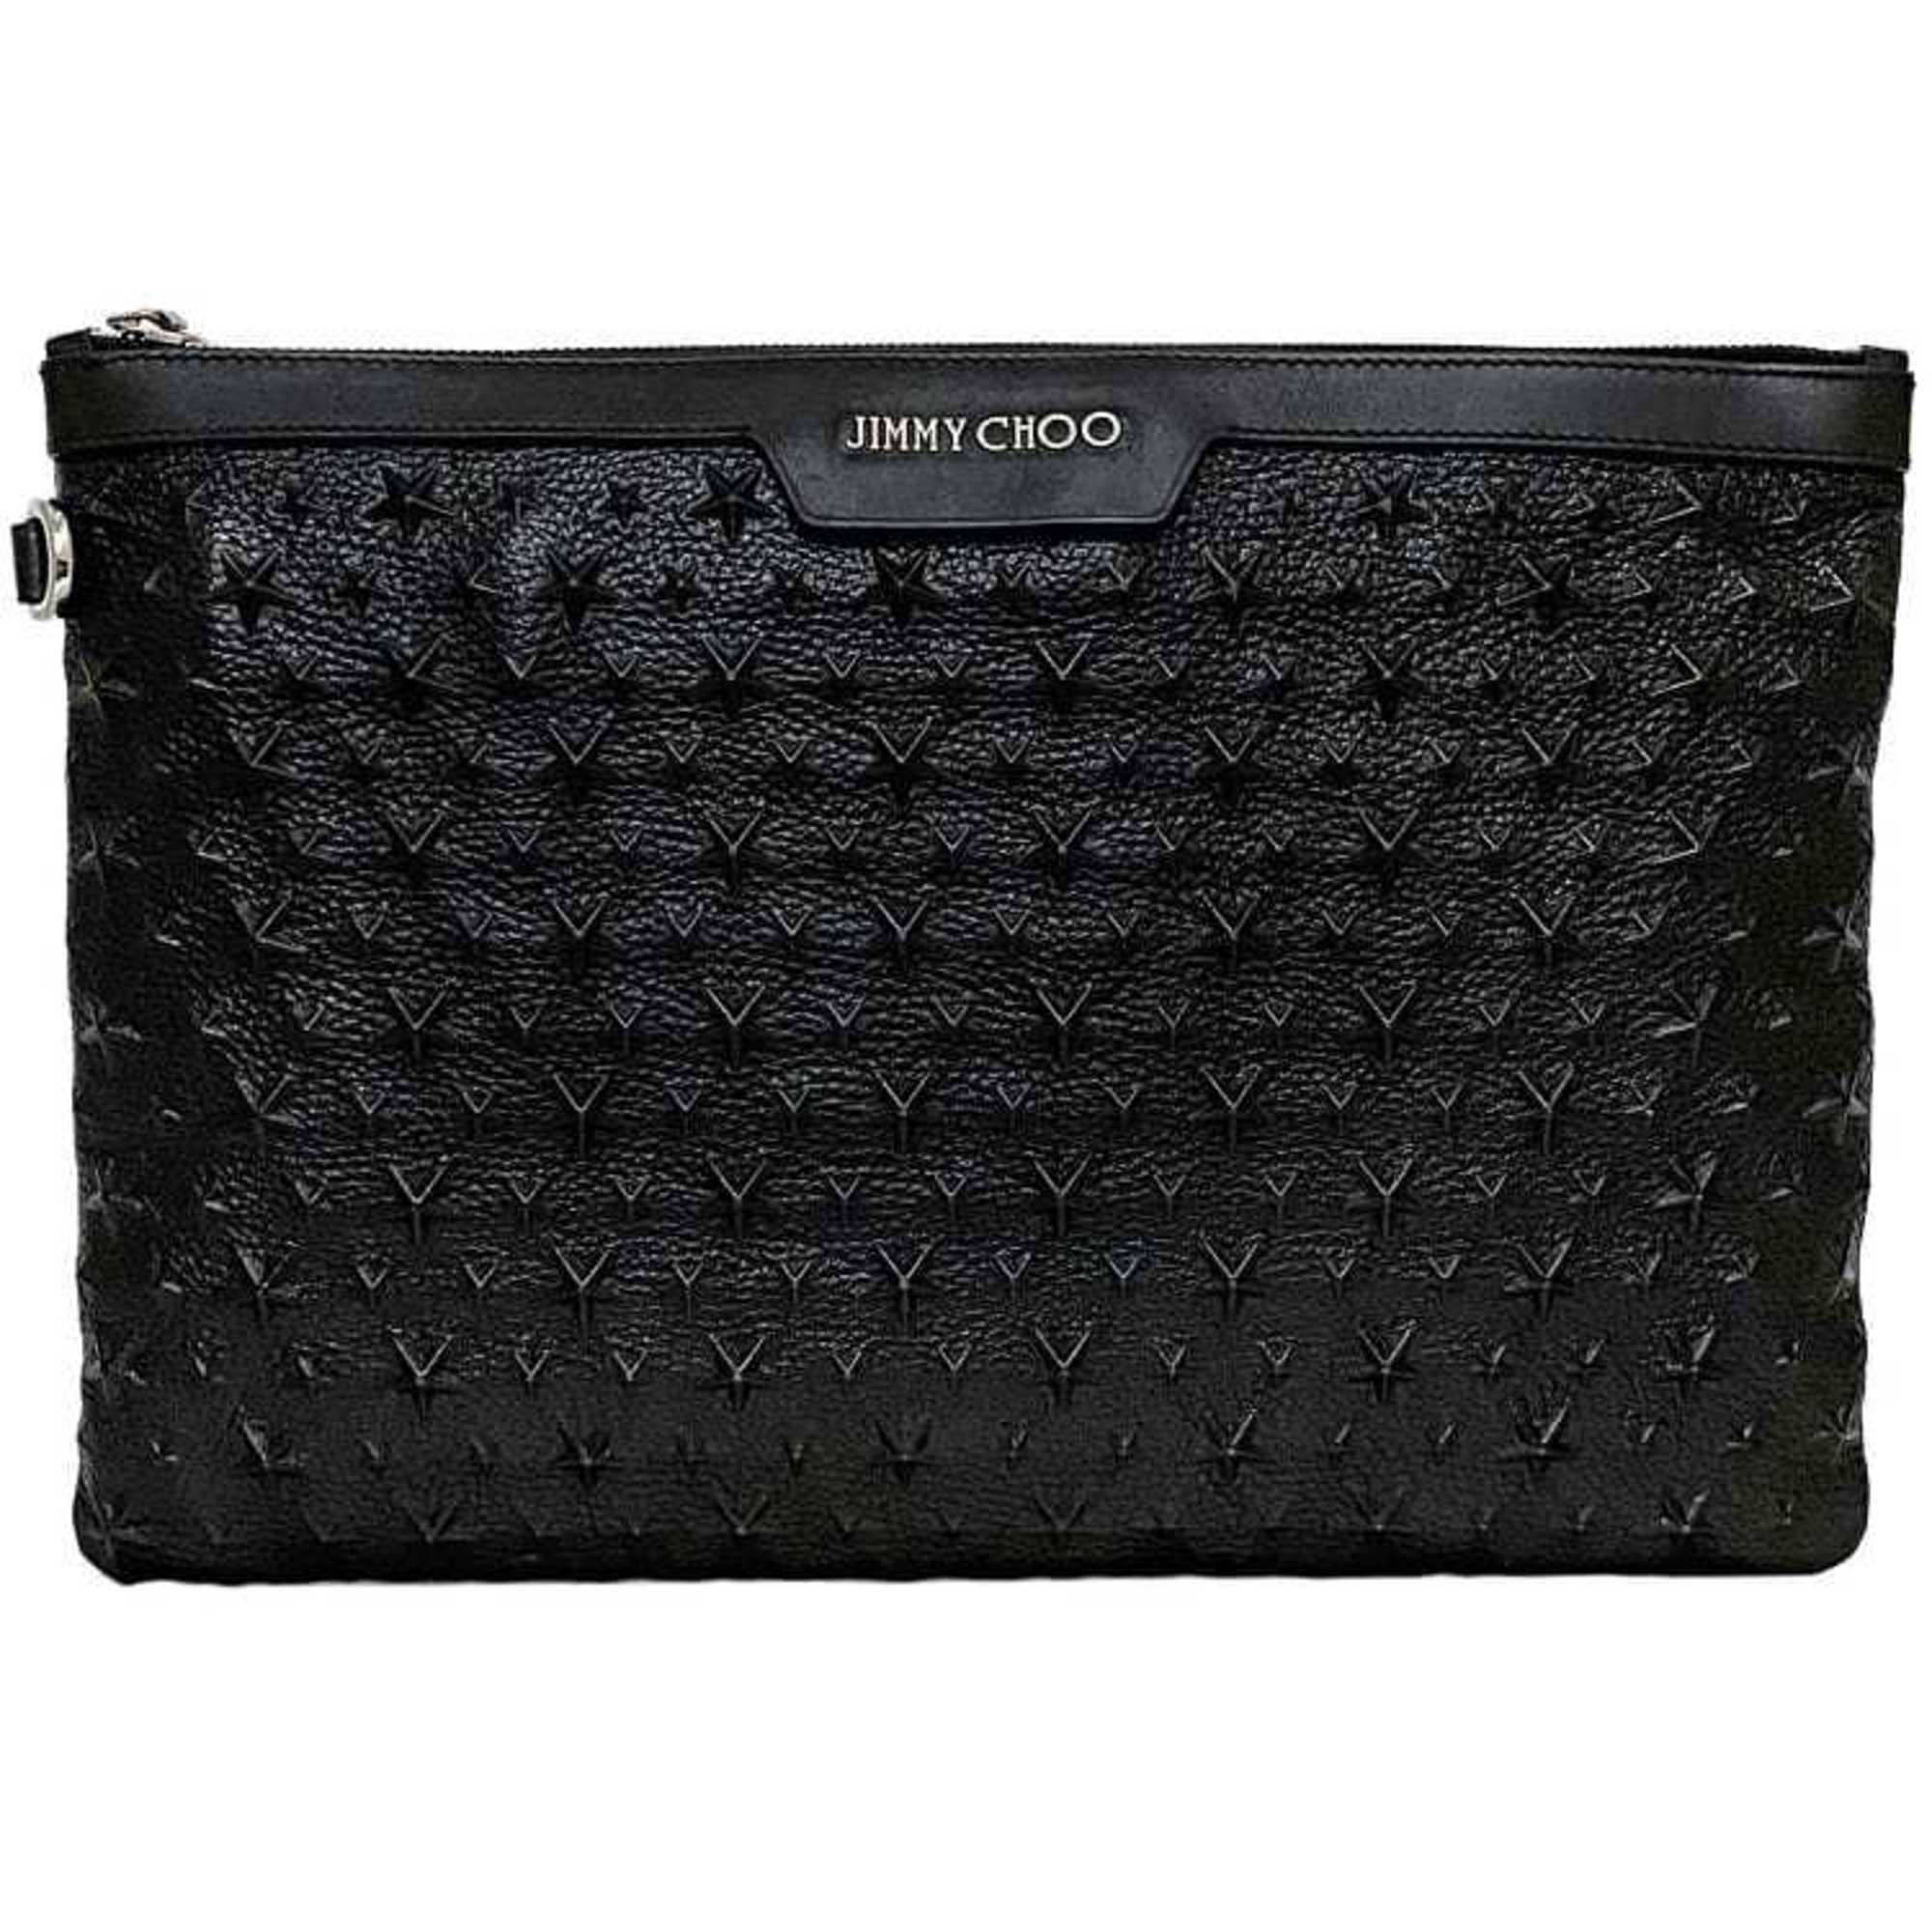 Jimmy Choo clutch bag black handbag leather JIMMY CHOO star ladies compact